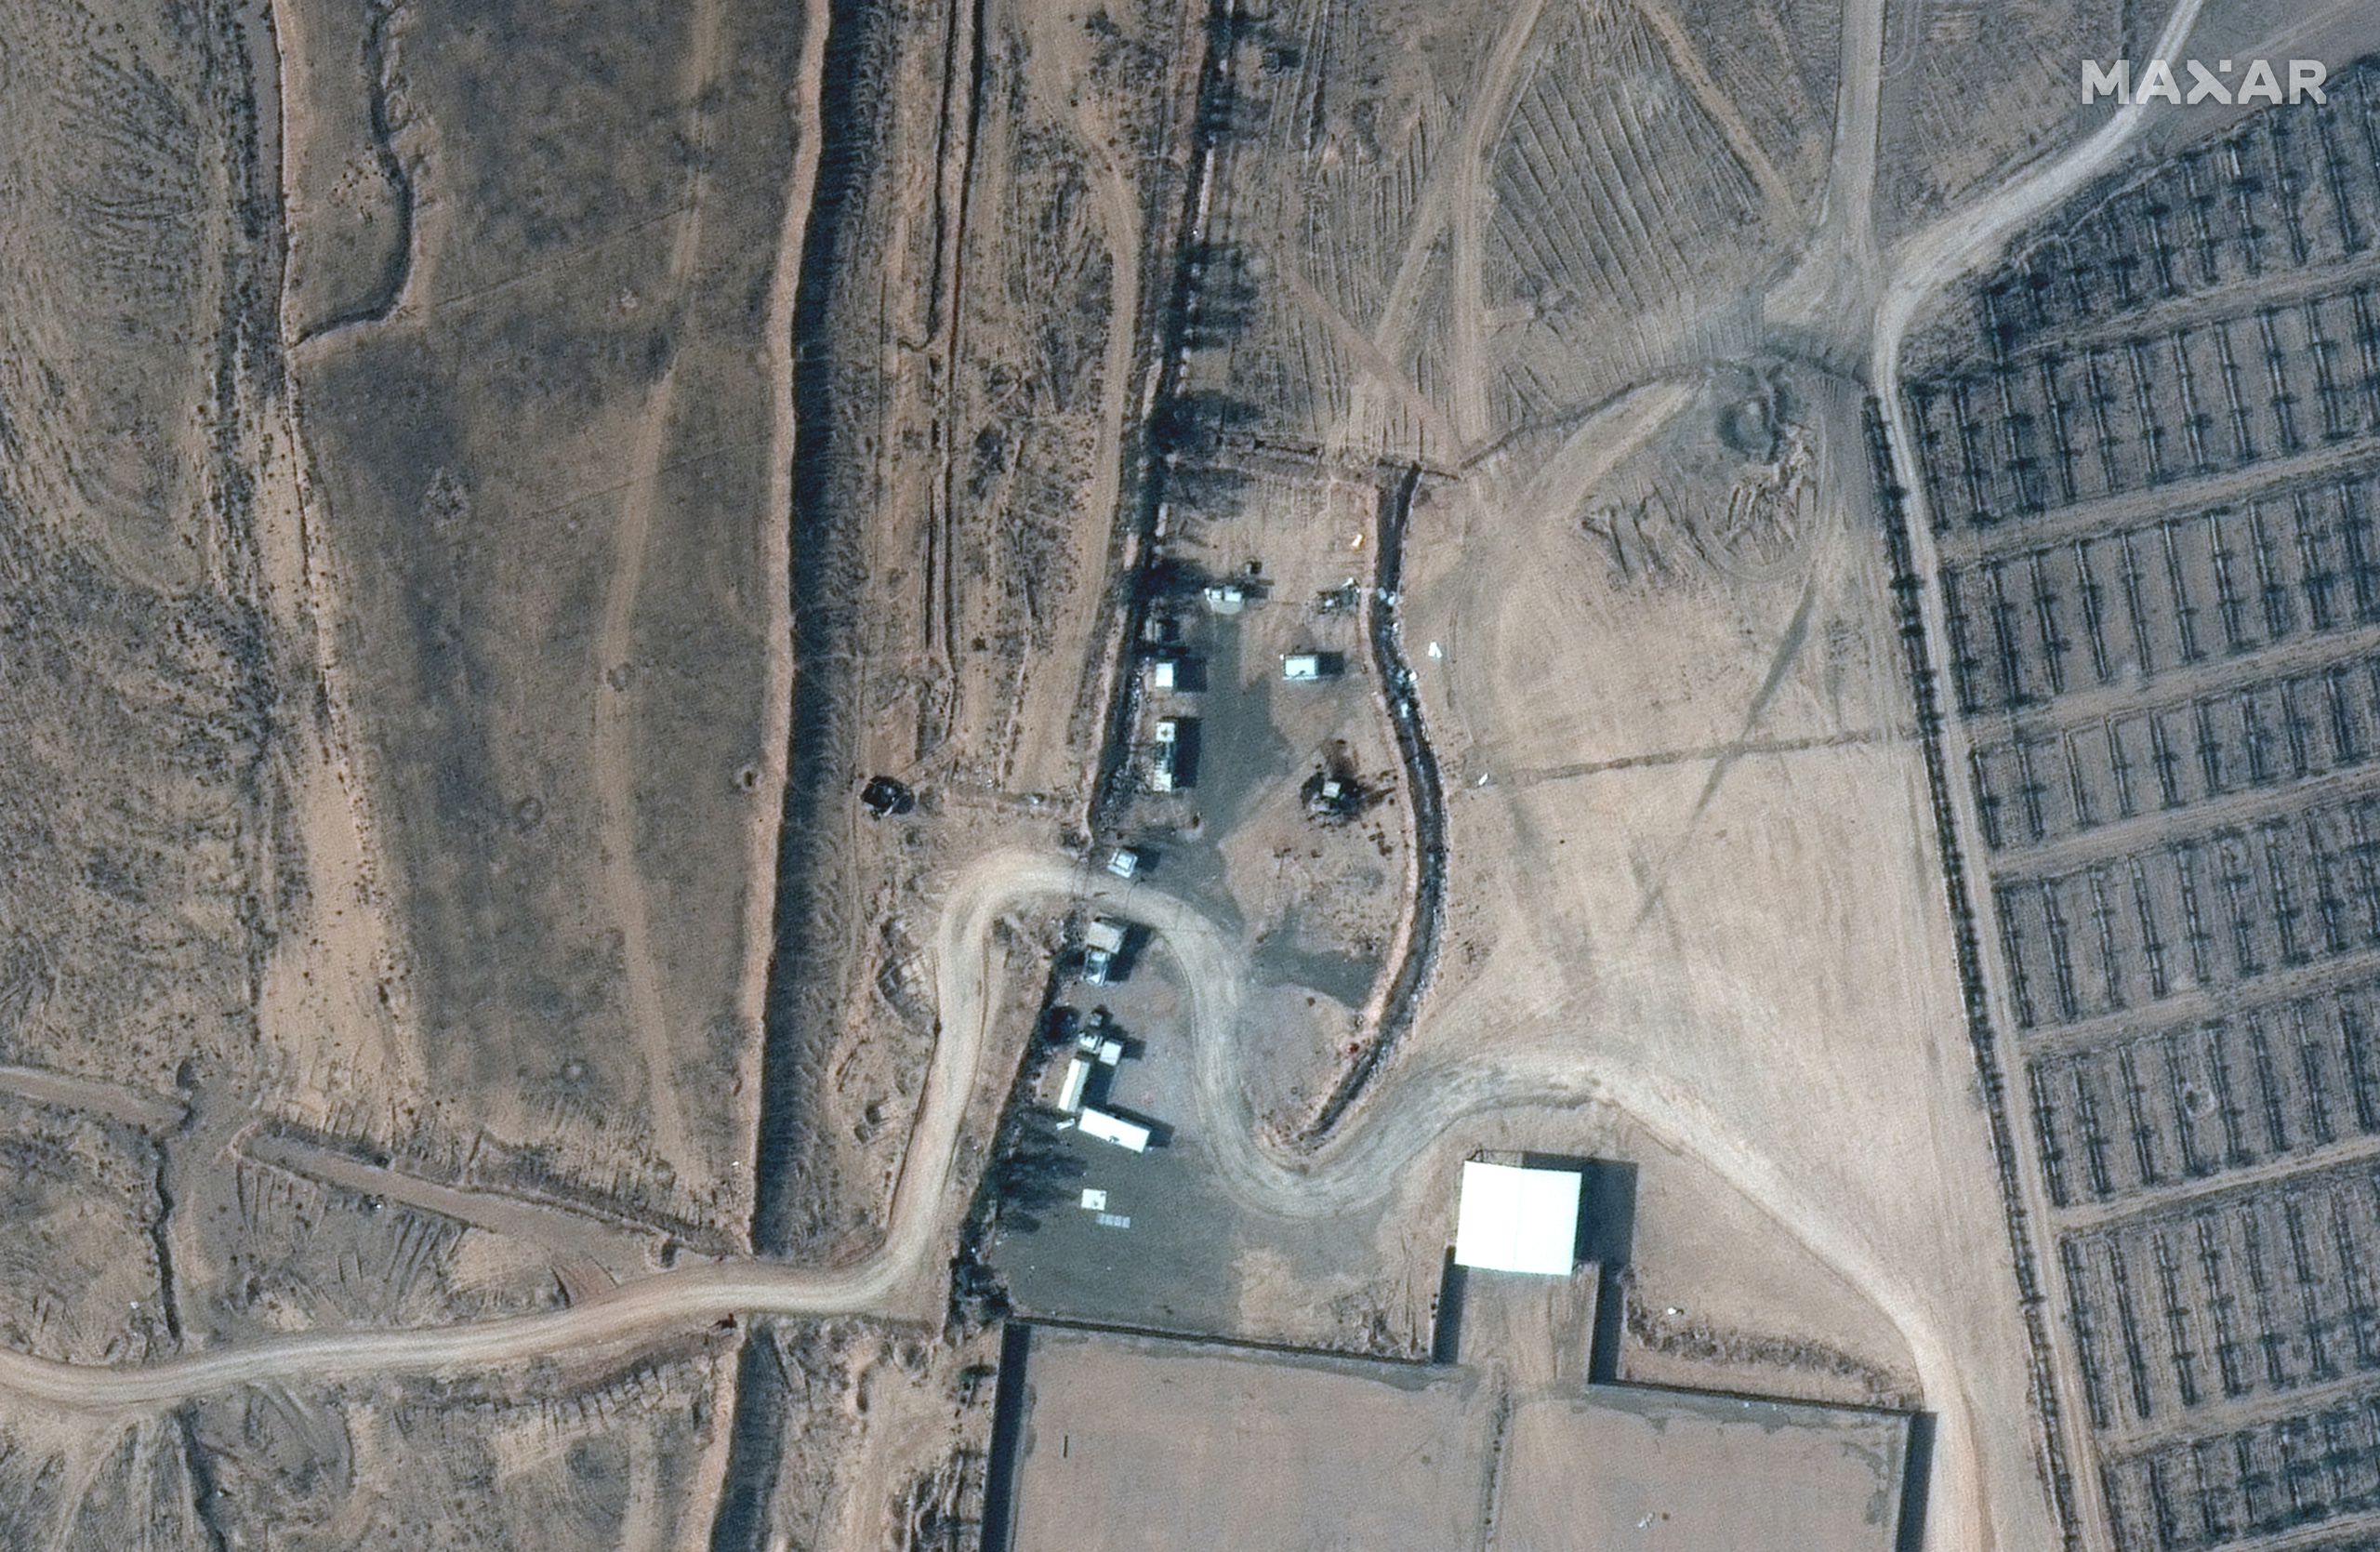 Biden's first military operation satellite image.